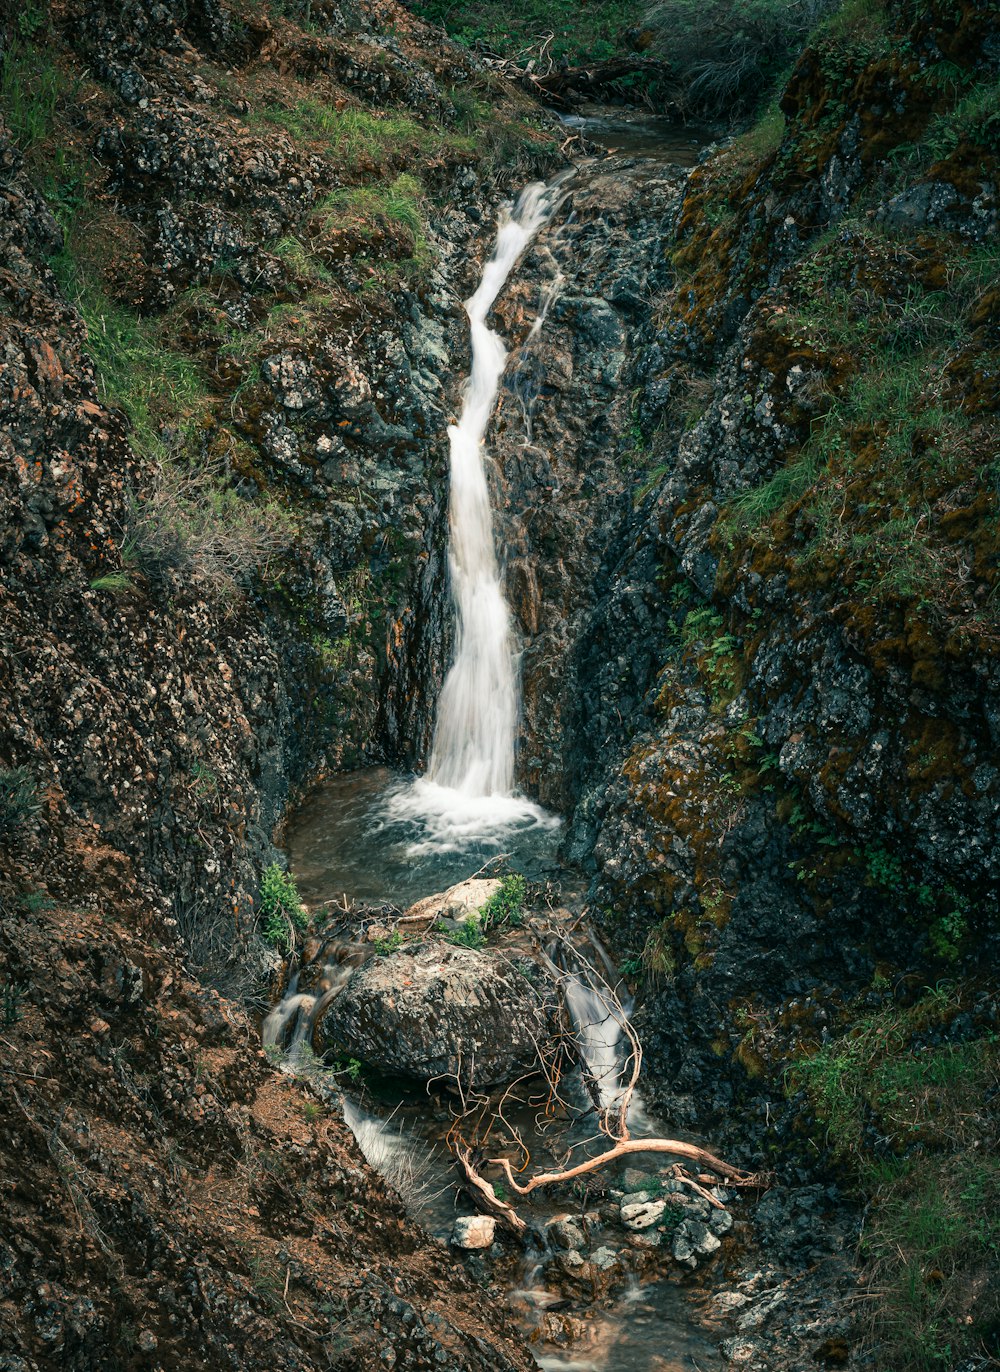 a small waterfall flowing down a rocky hillside